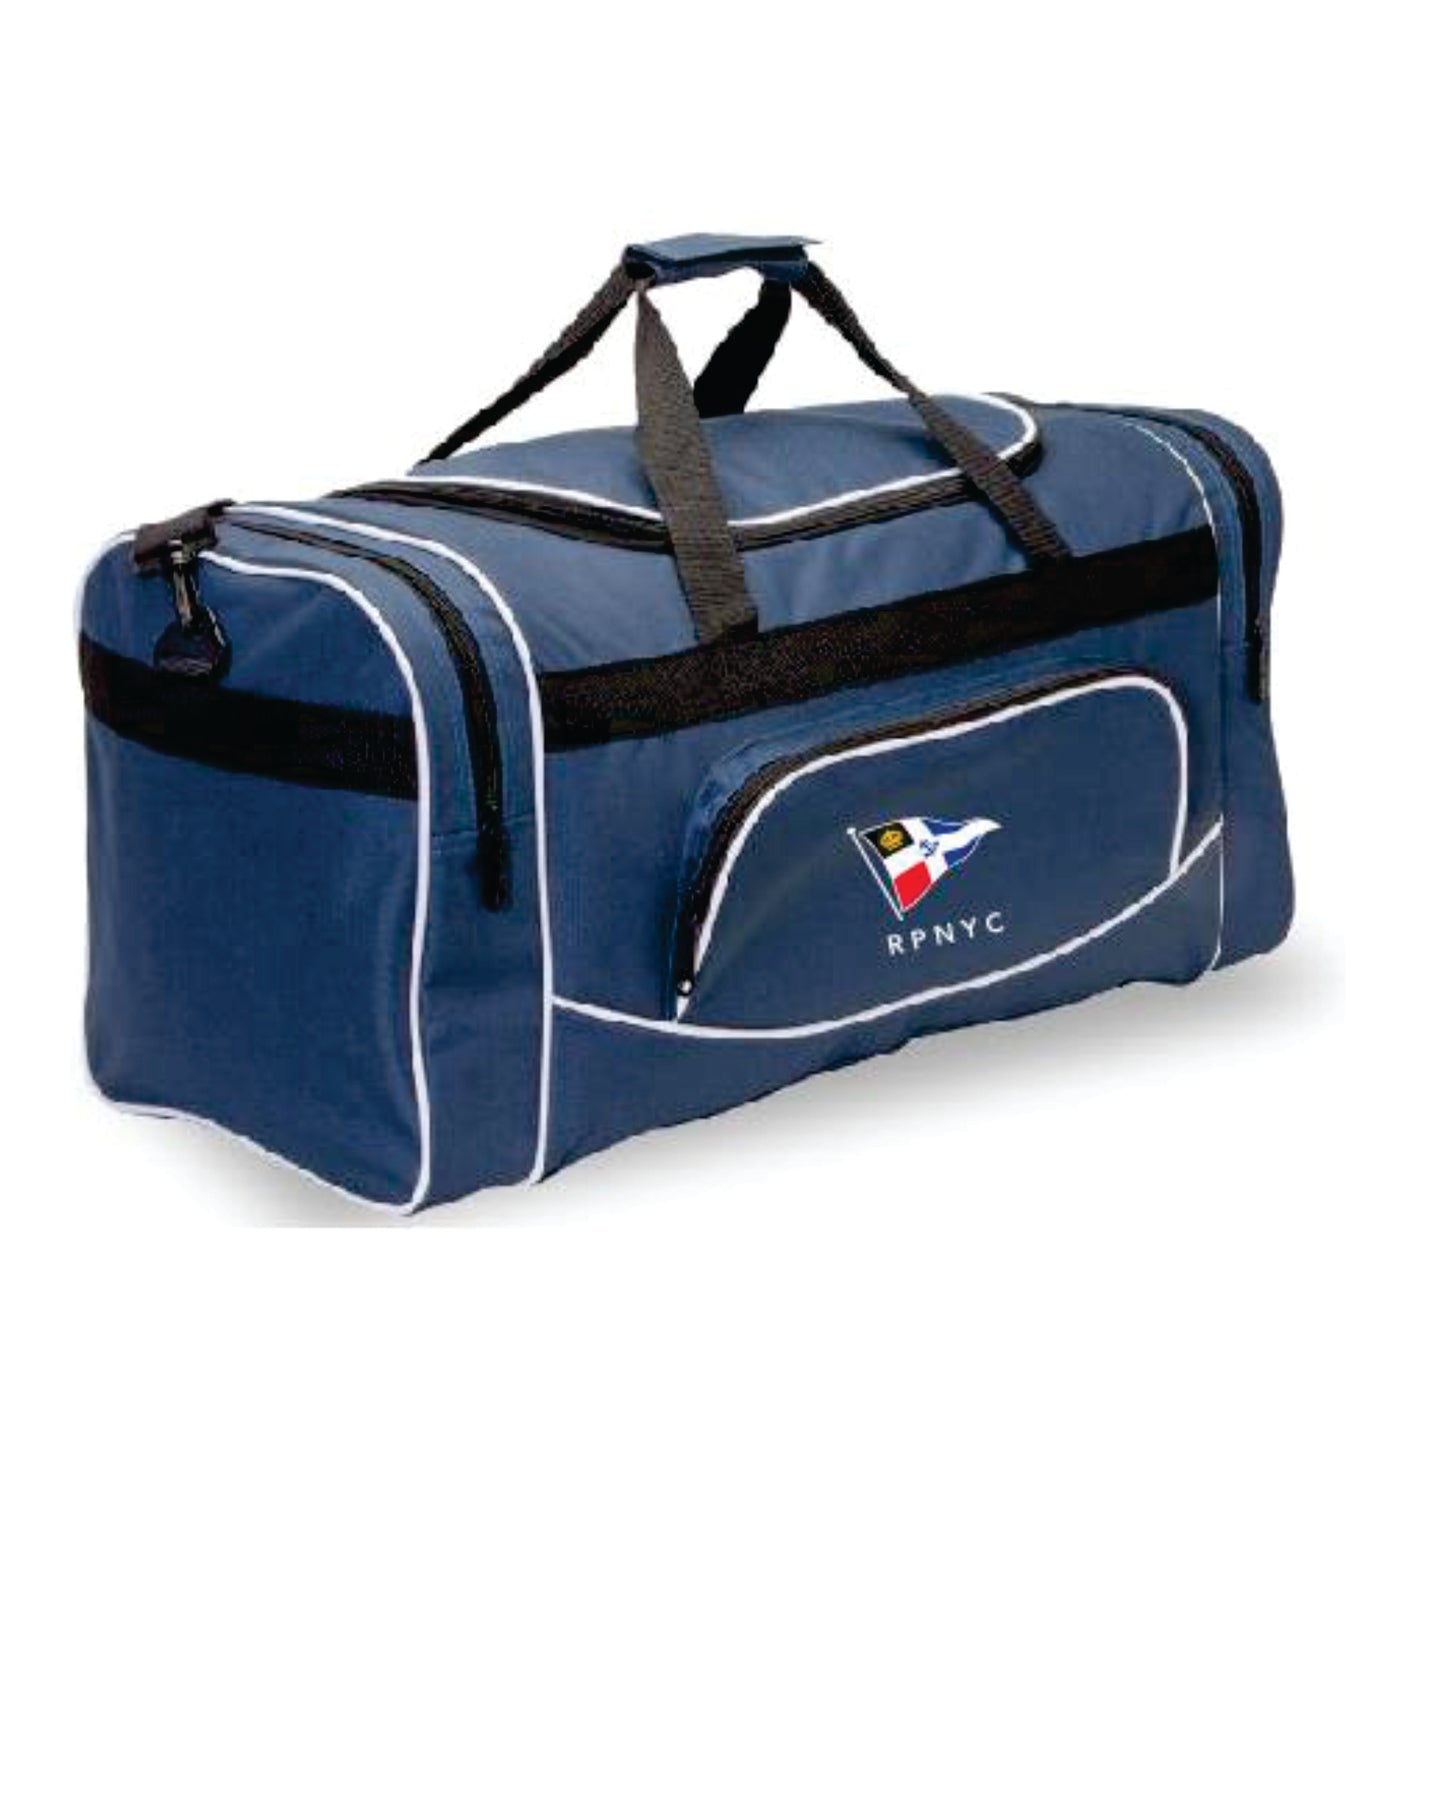 RPNYC Ranger Sports Bag